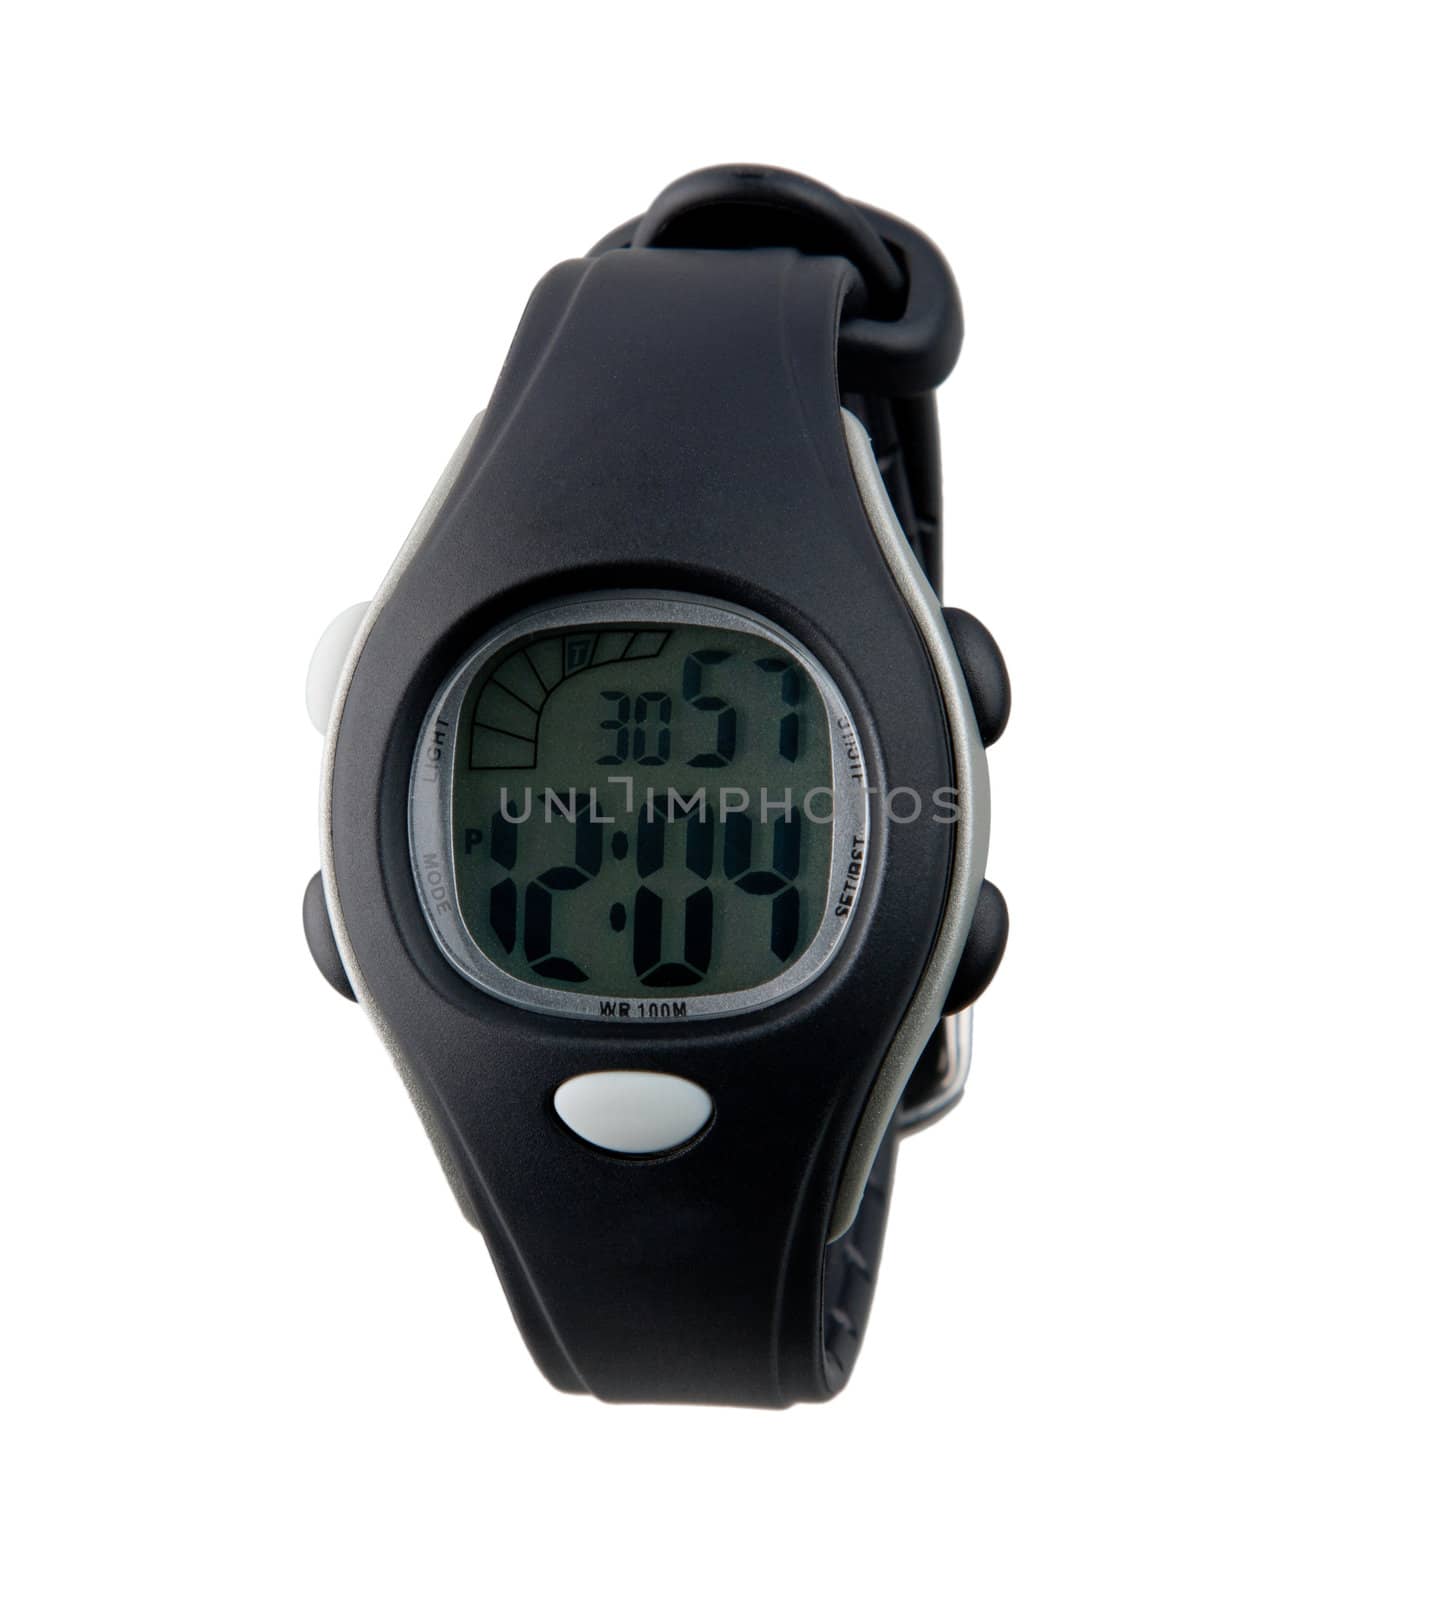 Modern design of the digital panel wristwatch